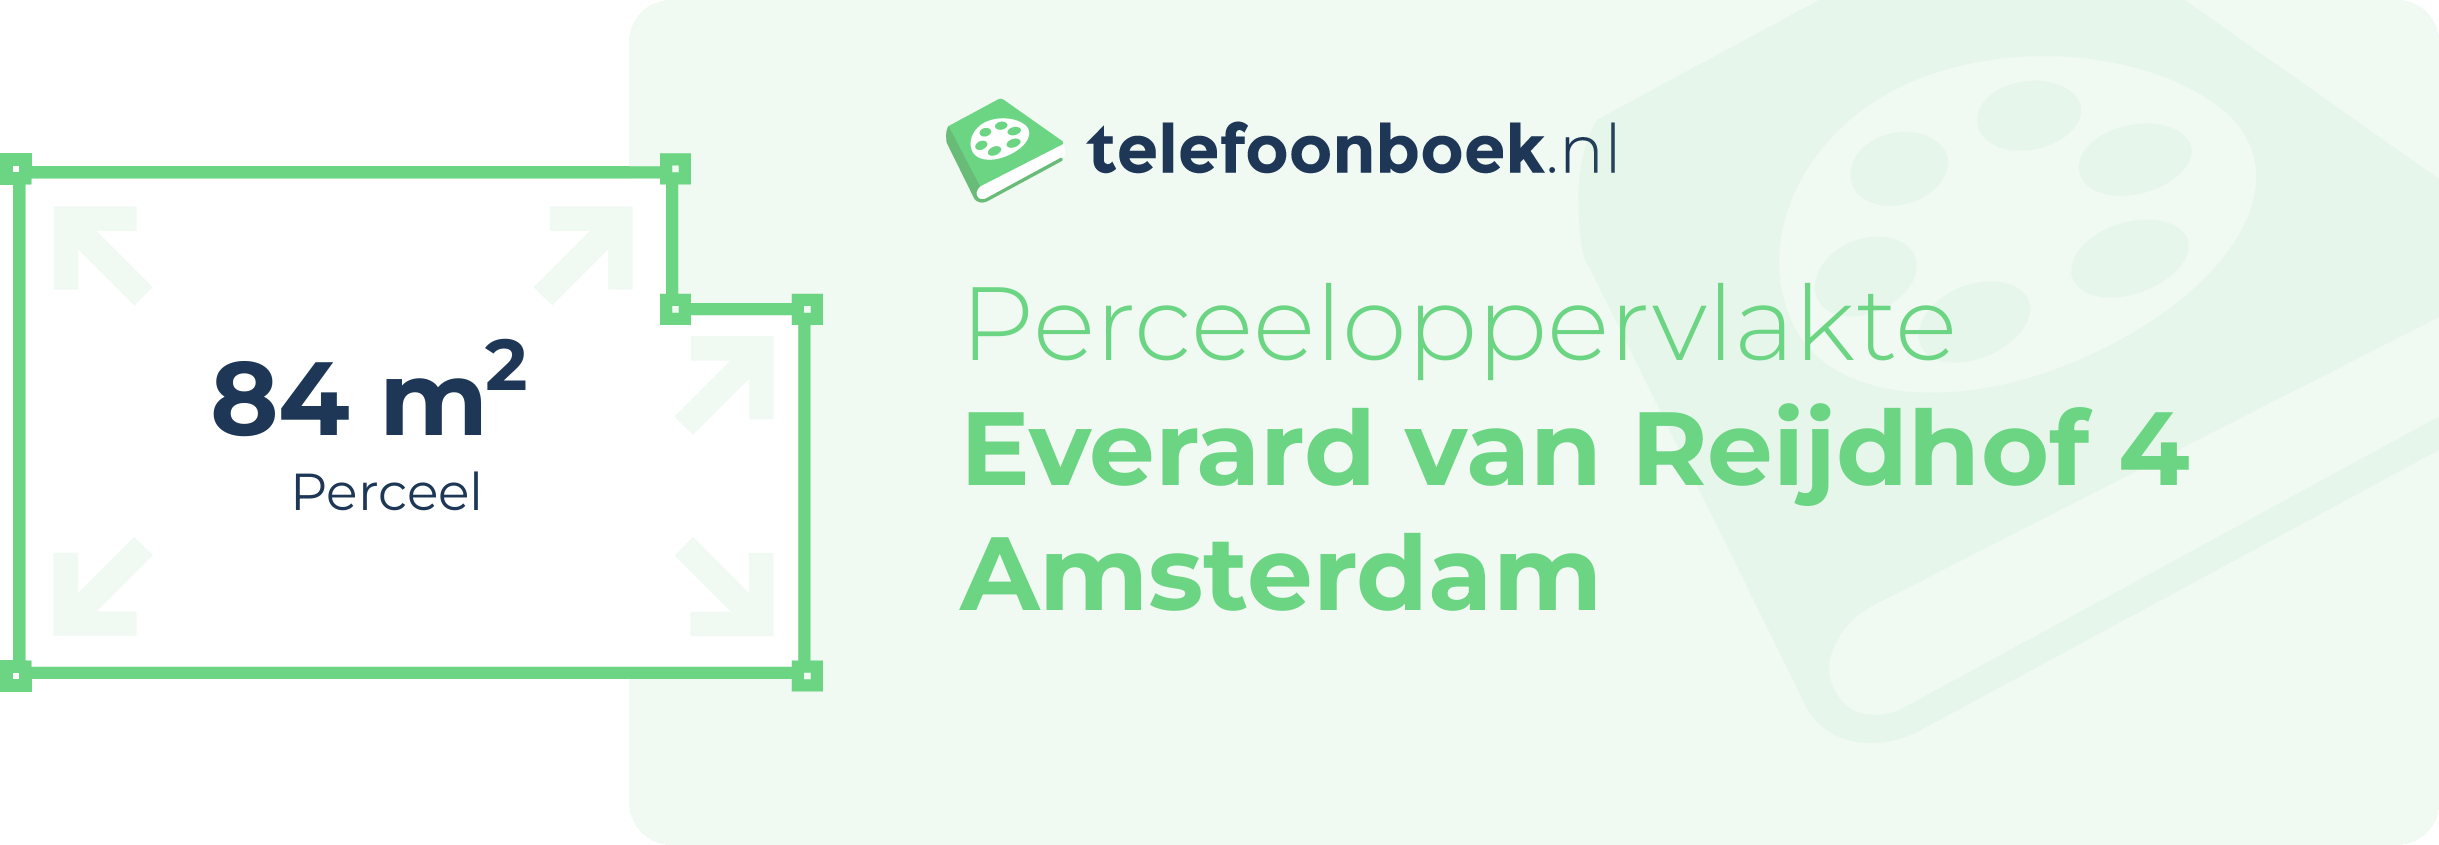 Perceeloppervlakte Everard Van Reijdhof 4 Amsterdam